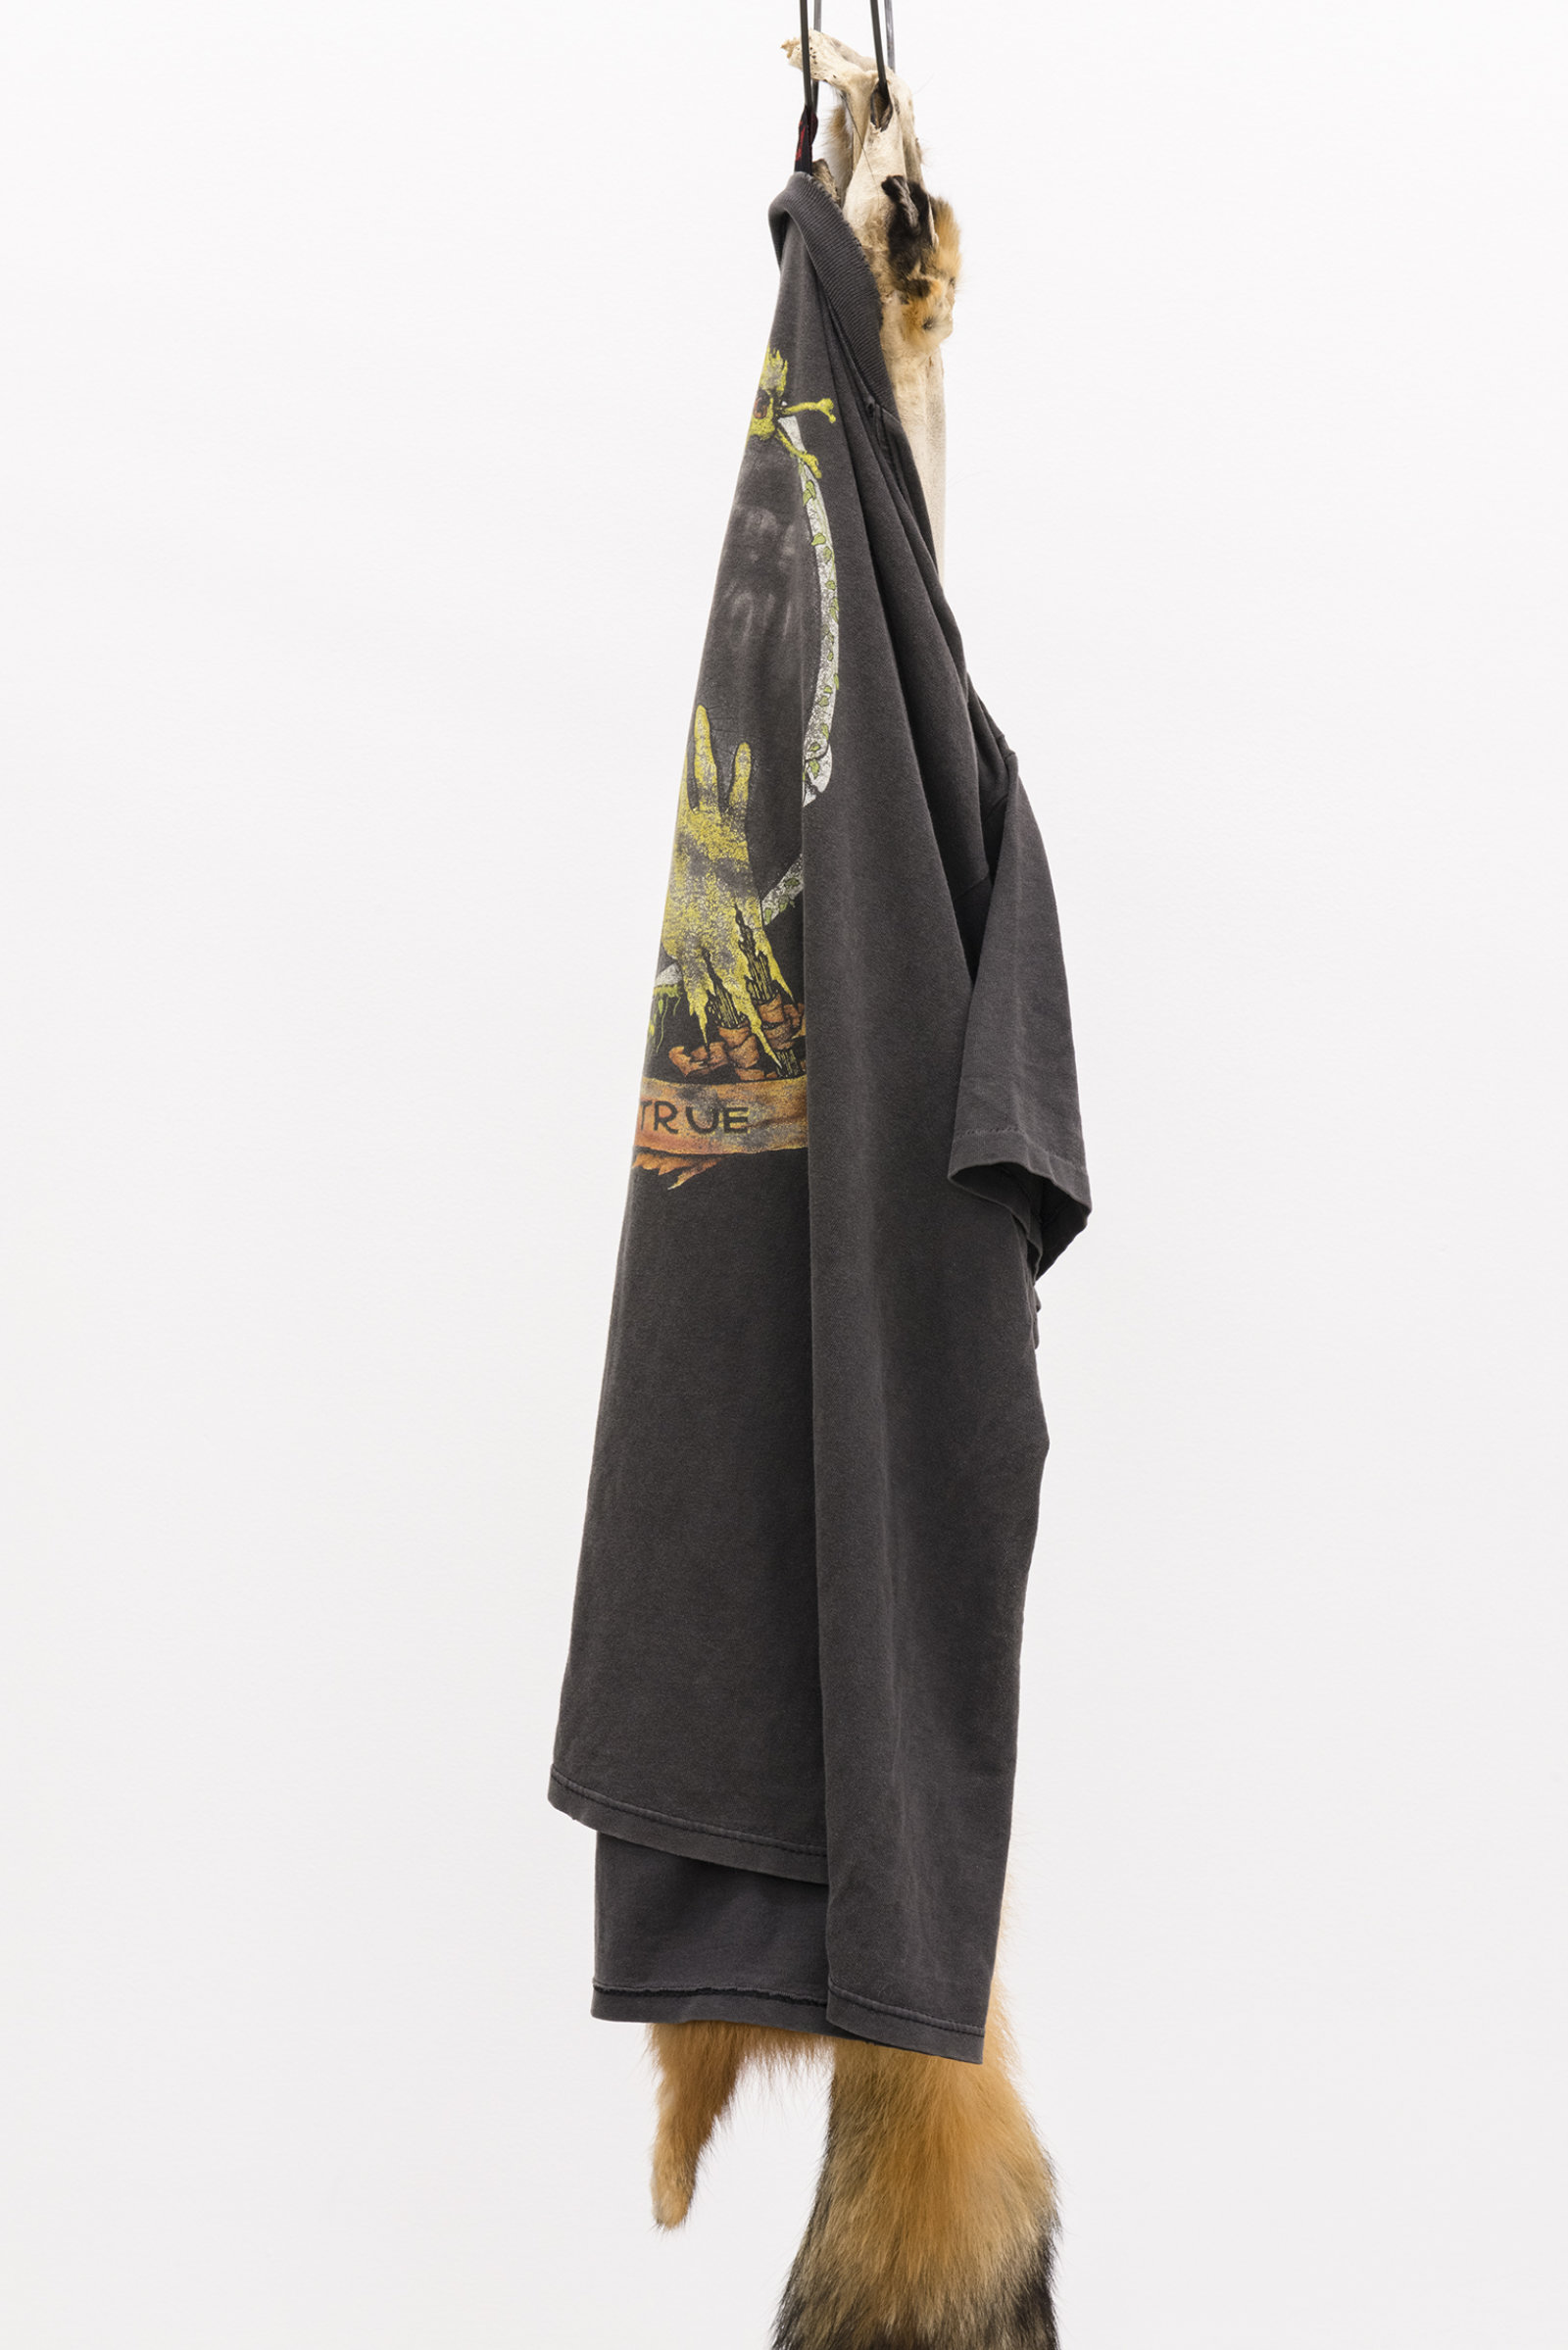 Duane Linklater, My brother in law, my sister (detail), 2014, fox fur, garment rack, hangers, t-shirt, 66 x 60 x 20 in. (168 x 151 x 52 cm)